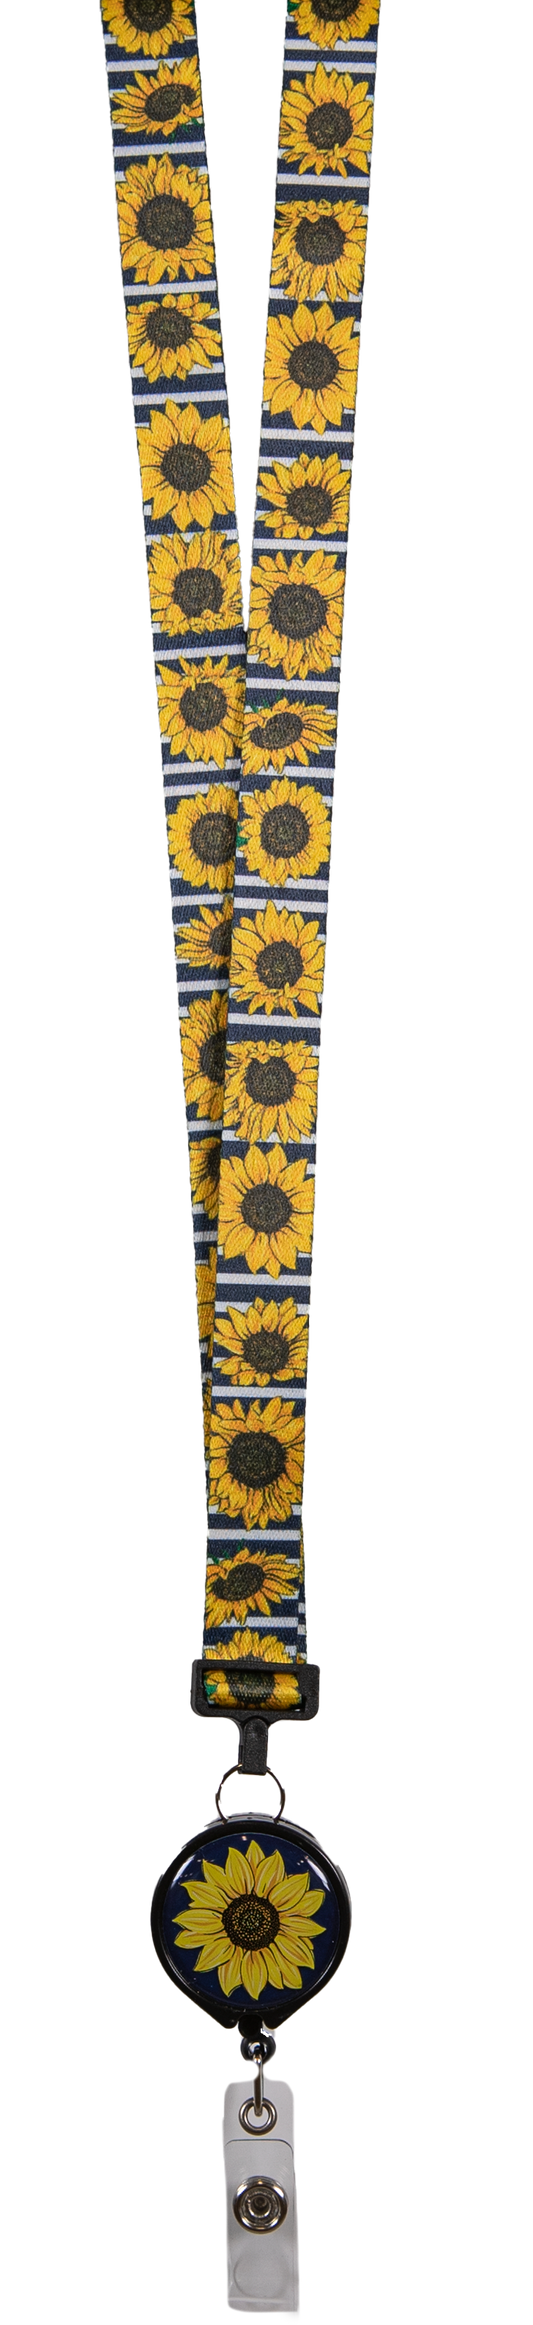 Sunflower Lanyard